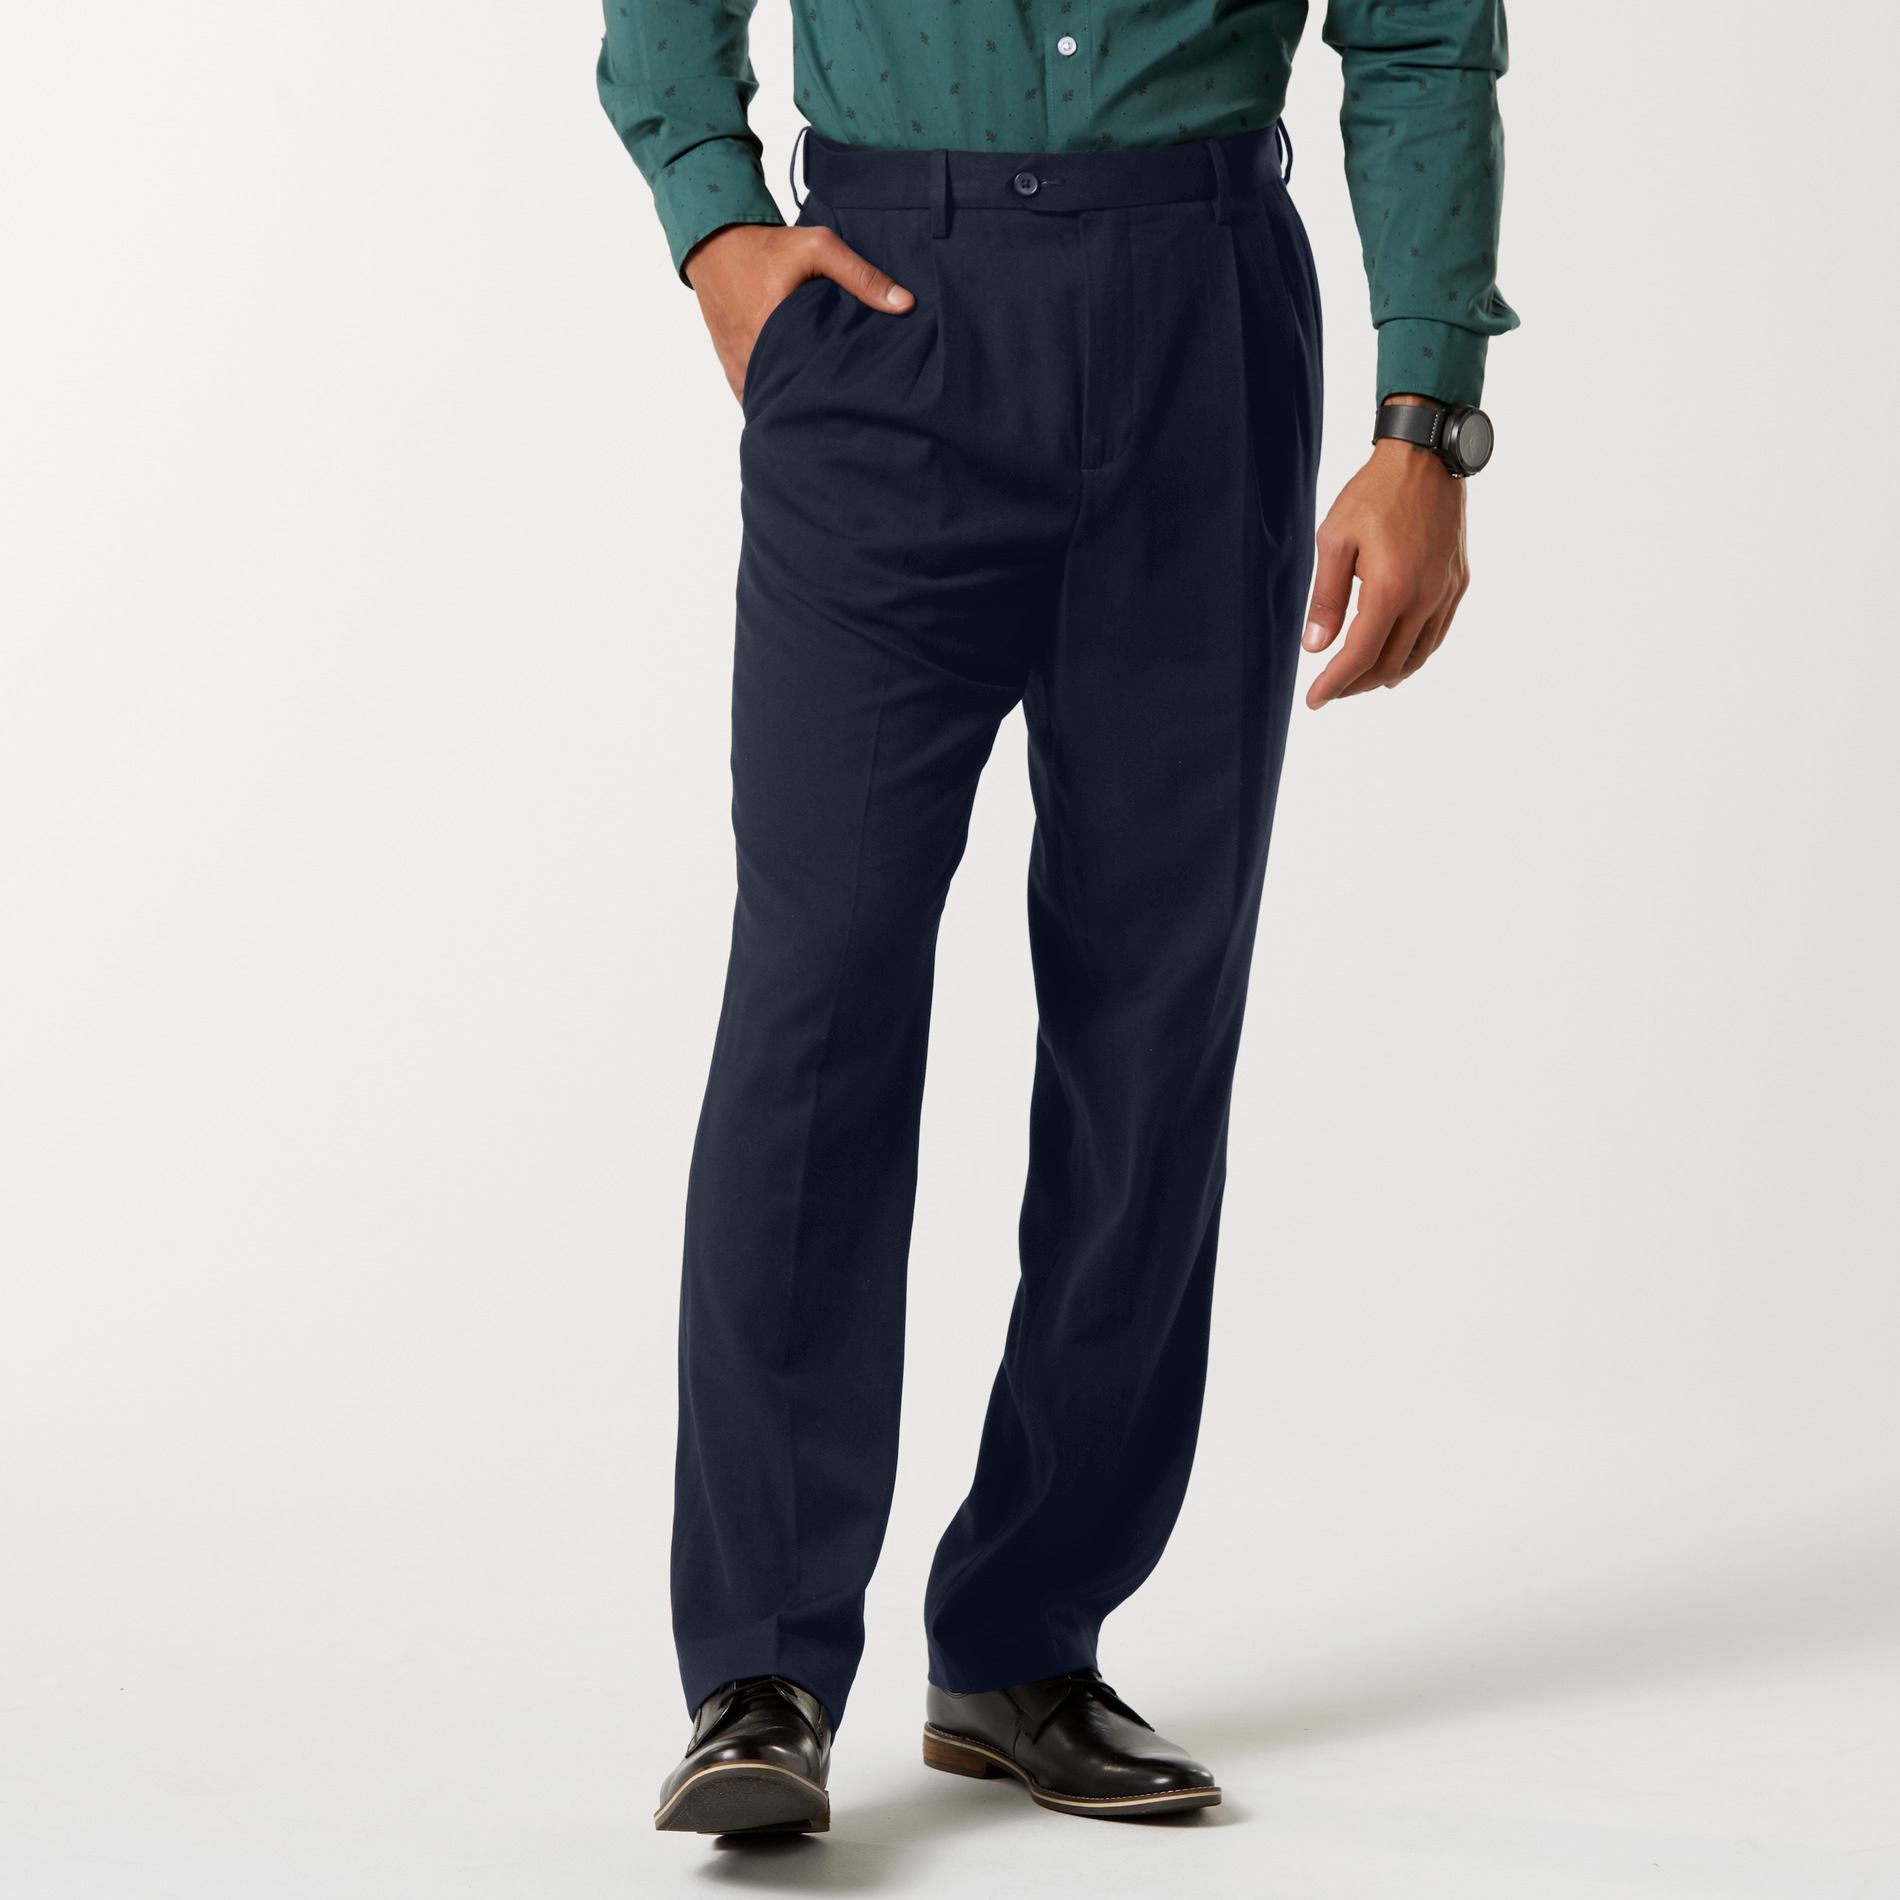 David Taylor Collection Men's Classic Fit Dress Pants